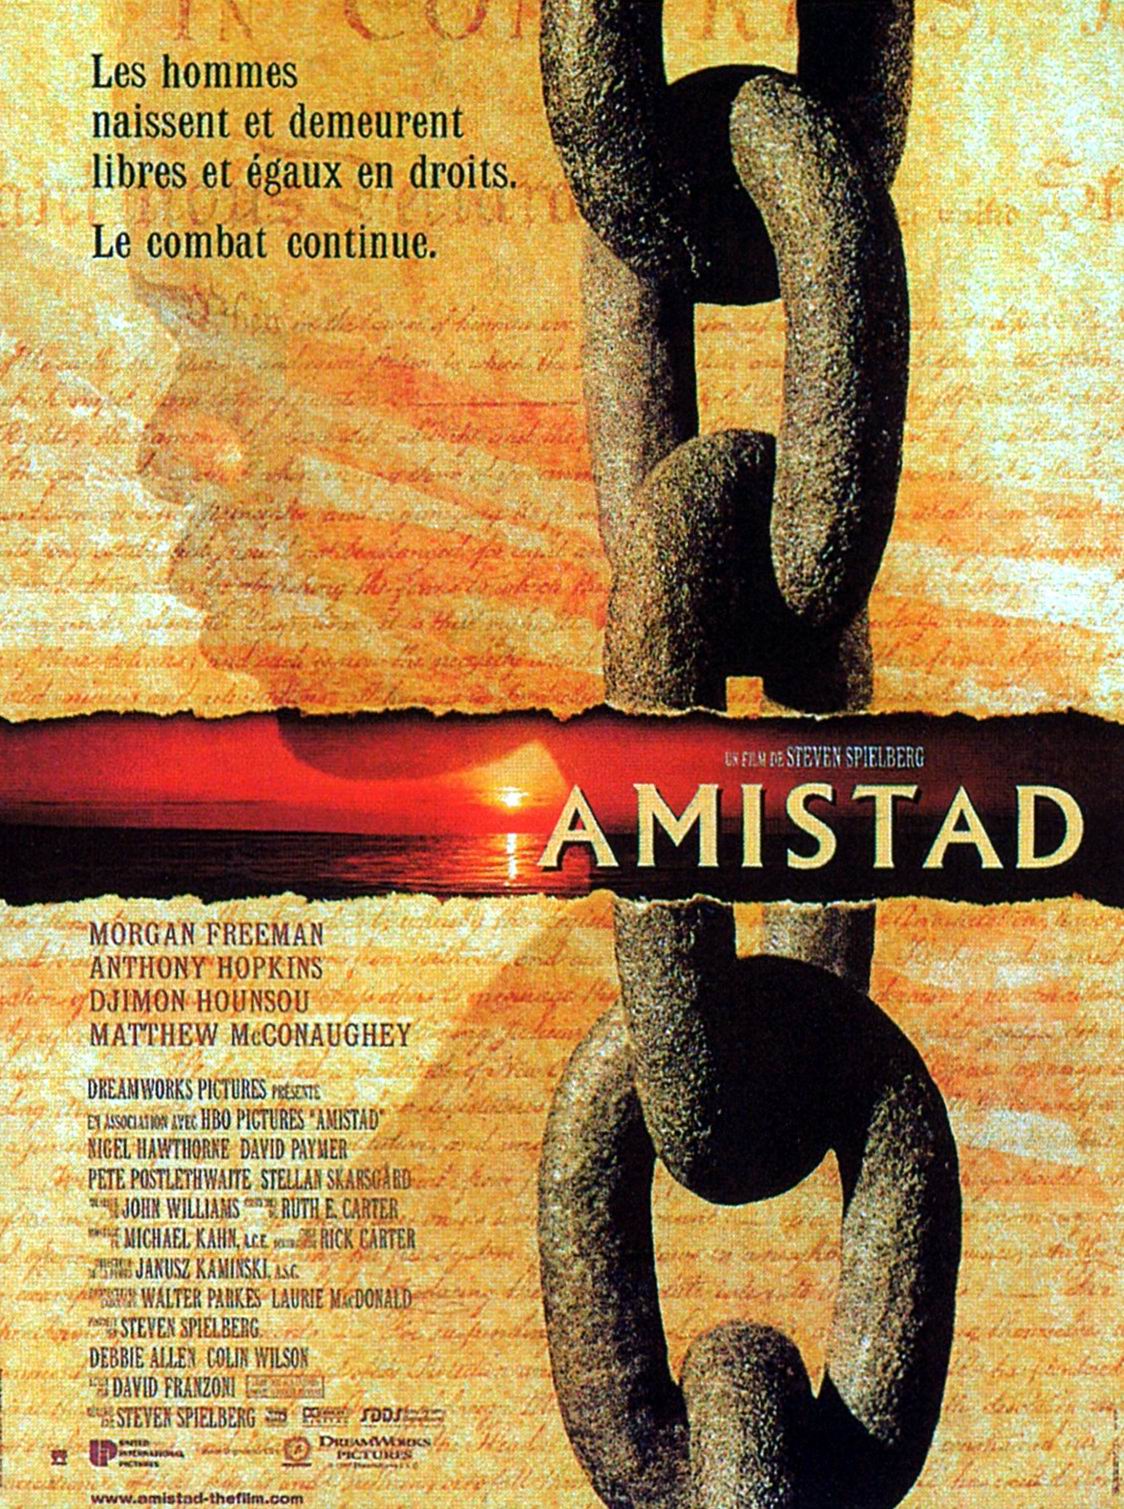 Amistad (1997) Steven Spielberg - Amistad (18.02.1997 / 30.04.1997)